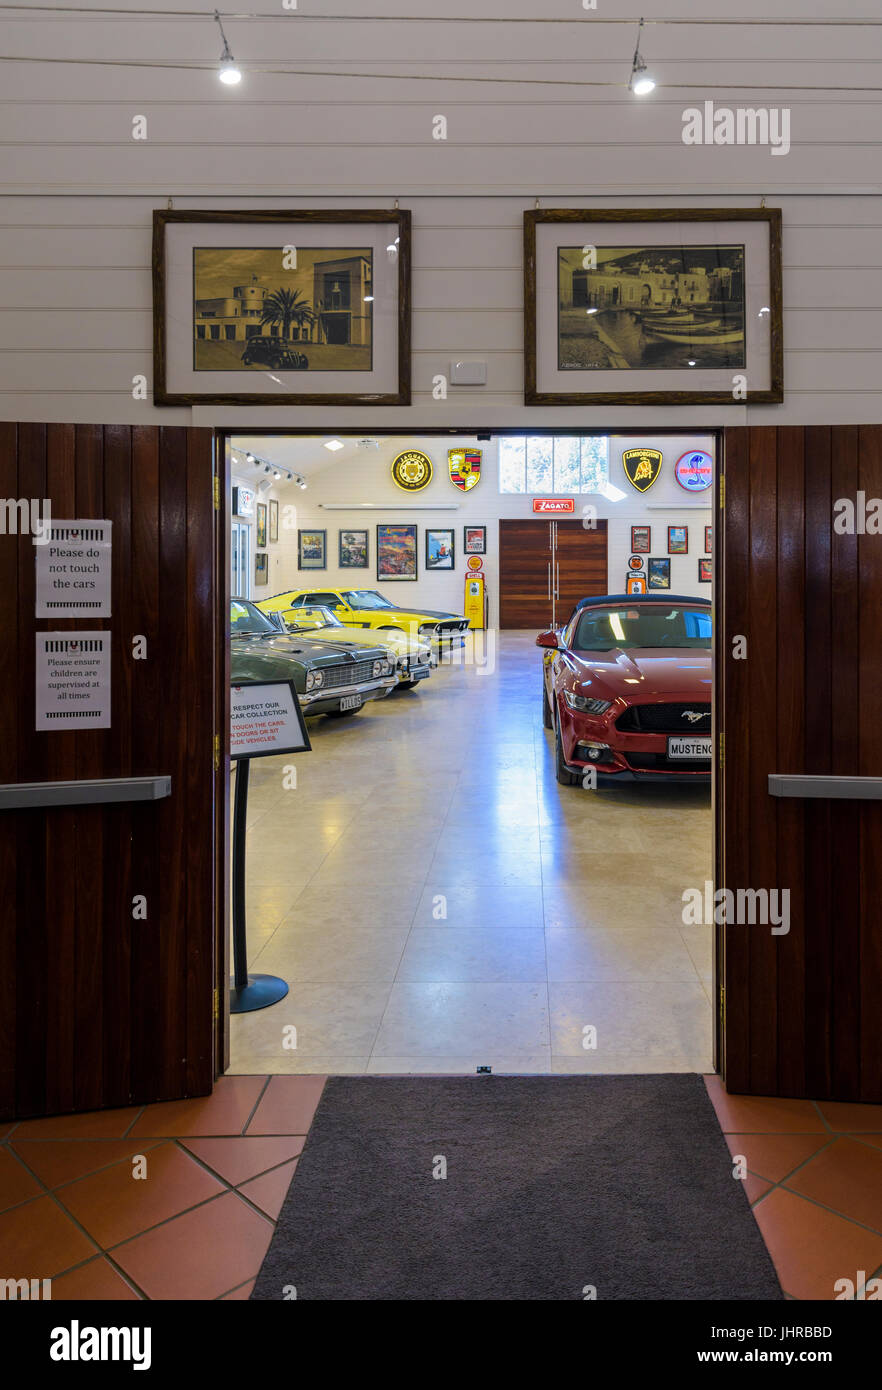 Sports Car Gallery at Aravina Estate winery restaurant cellar door in the Margaret River region of Western Australia, Yallingup, Australia Stock Photo